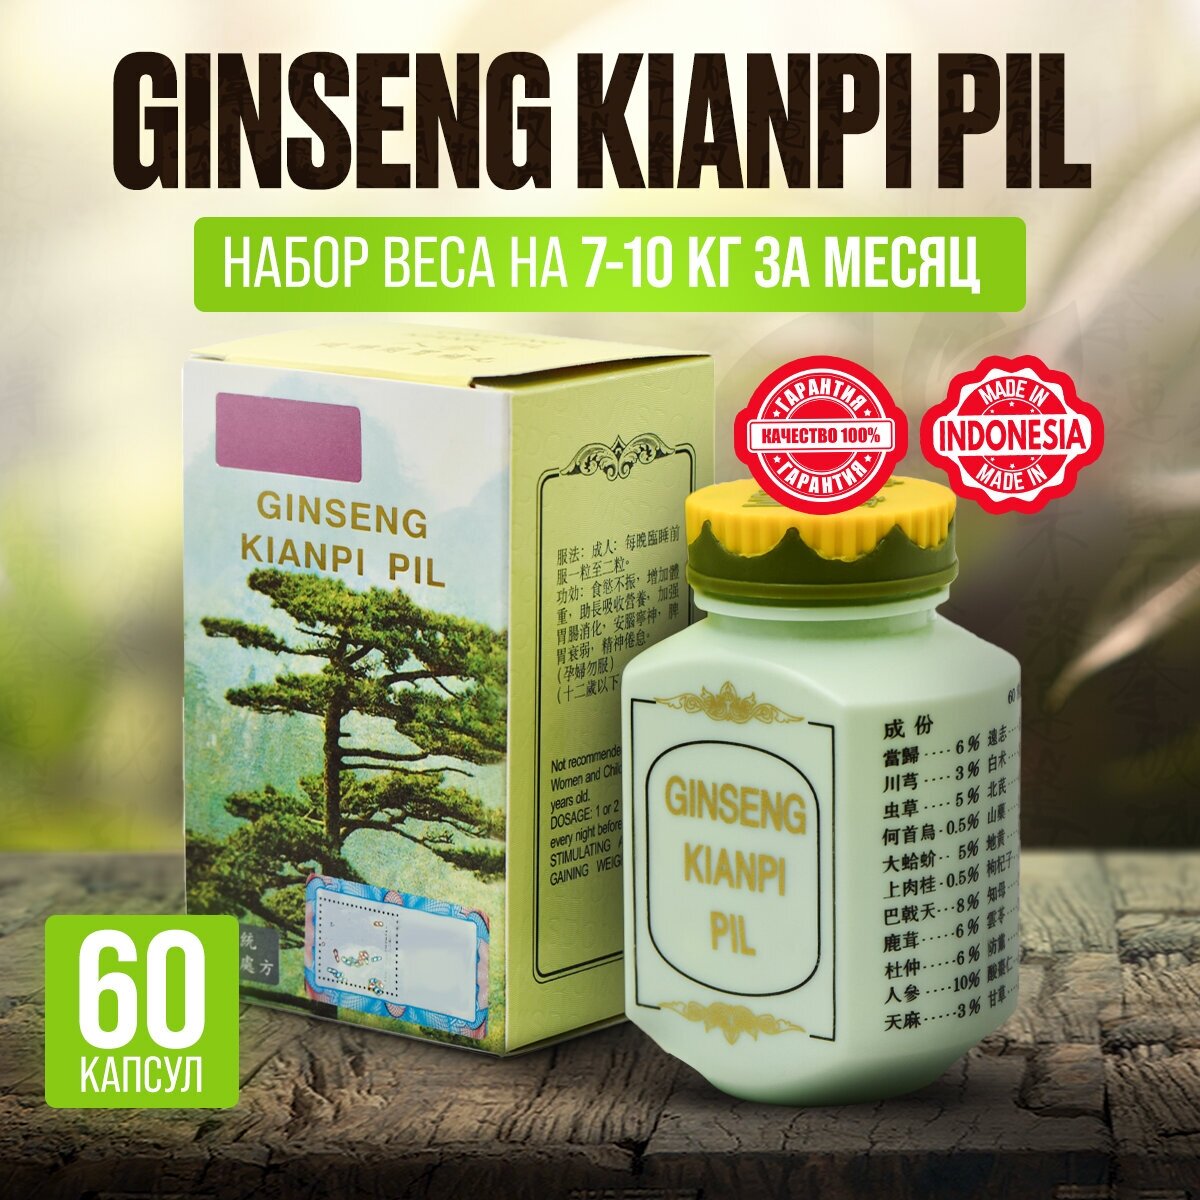 Ginseng kianpi pil таблетки для набора веса и массы + Жиросжигатель ( Креатин, Аргинин, Глютамин ) 60 капсул